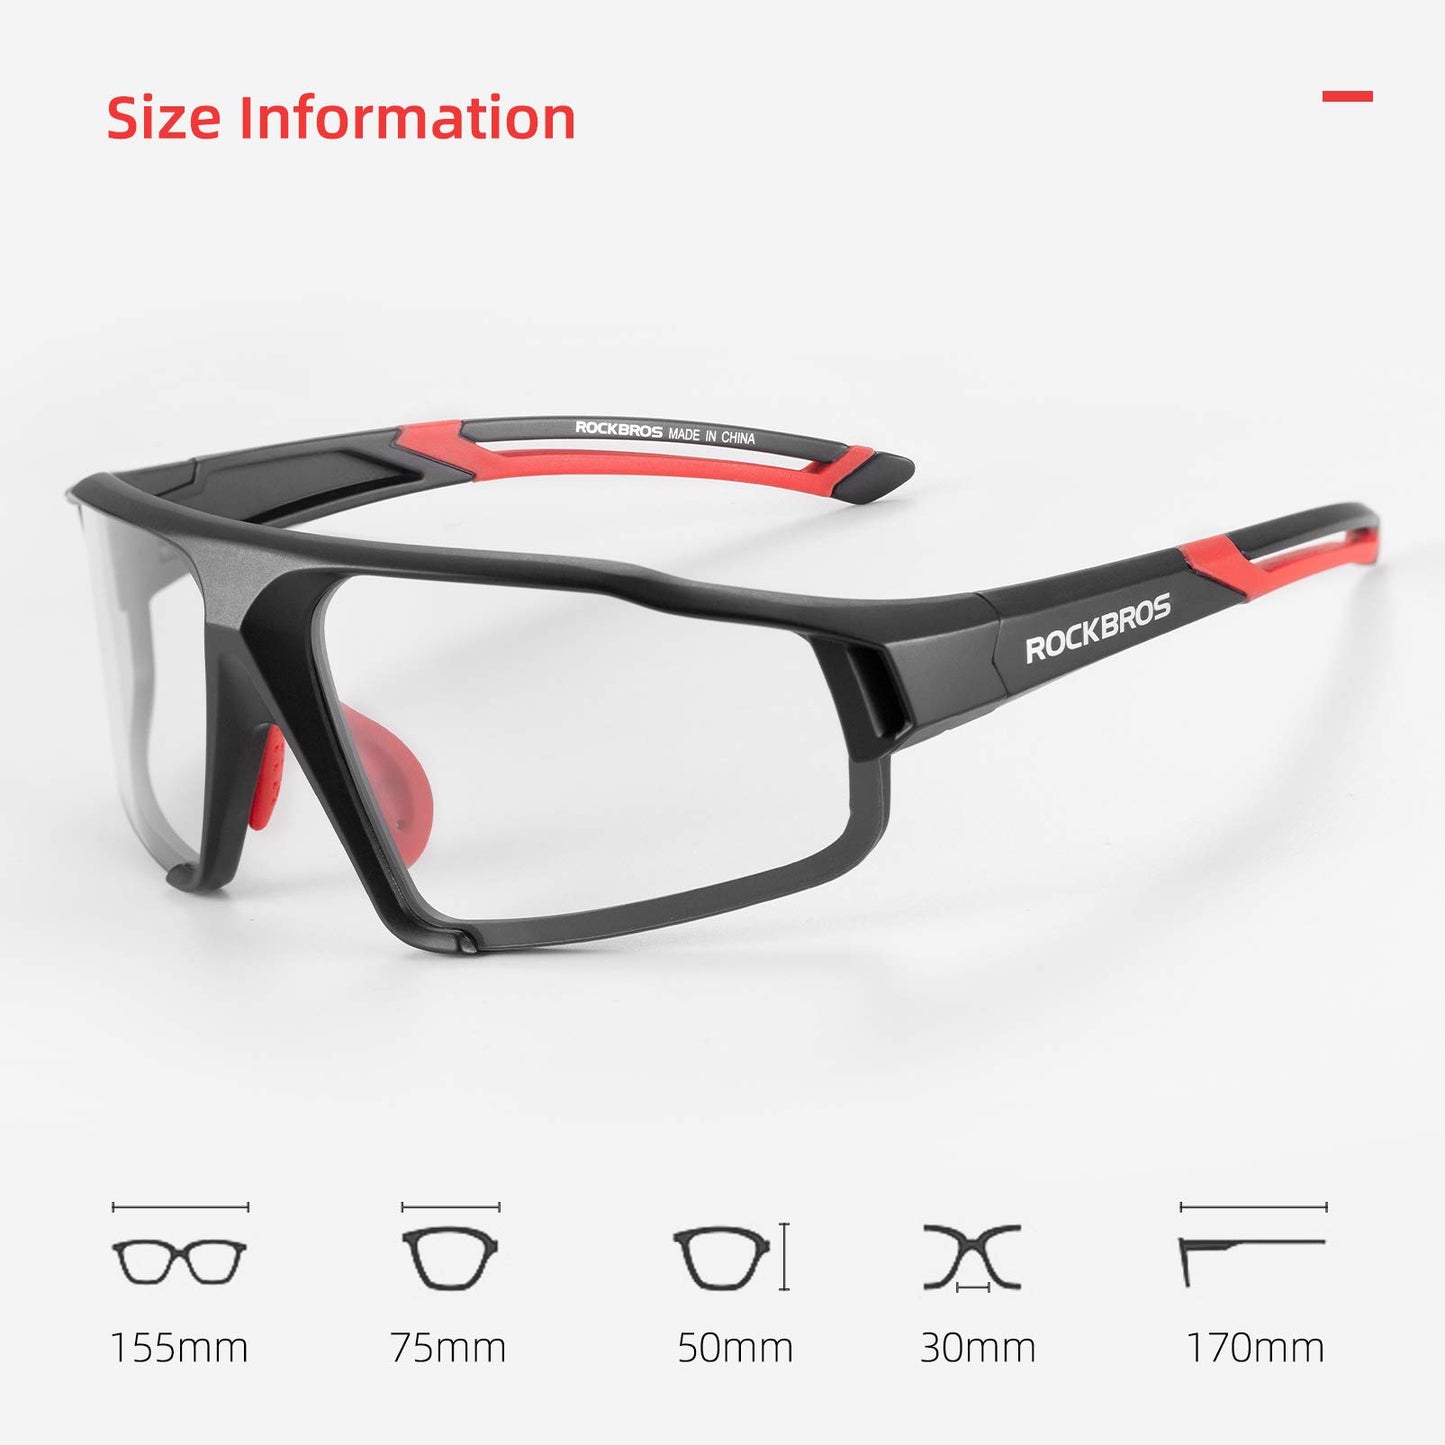 ROCKBROS Photochromic Cycling Glasses for Men Cycling Glasses Clear Safety Glasses Road Mountain Bike Bicycle Glasses